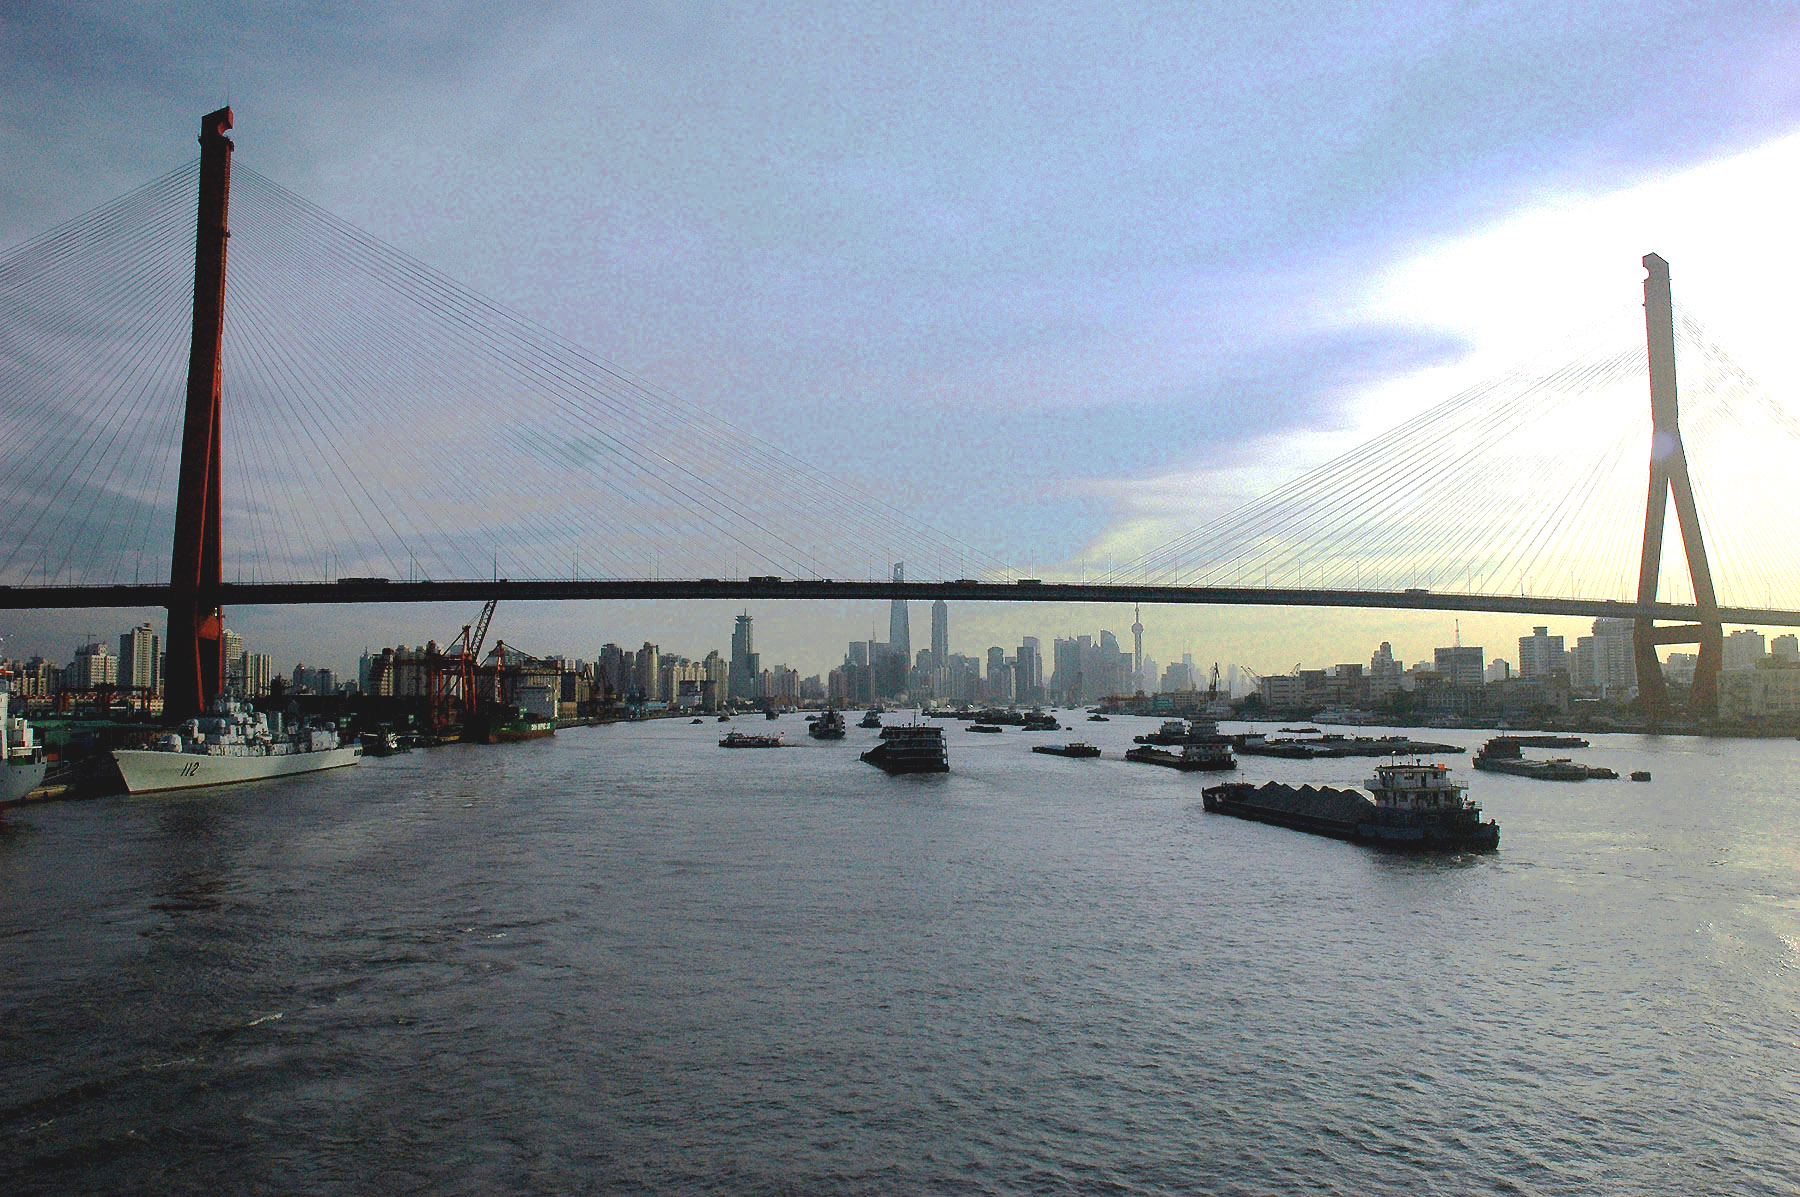 SKYLINE OF SHANGHAI UNDER THE YANG PU BRIDGE